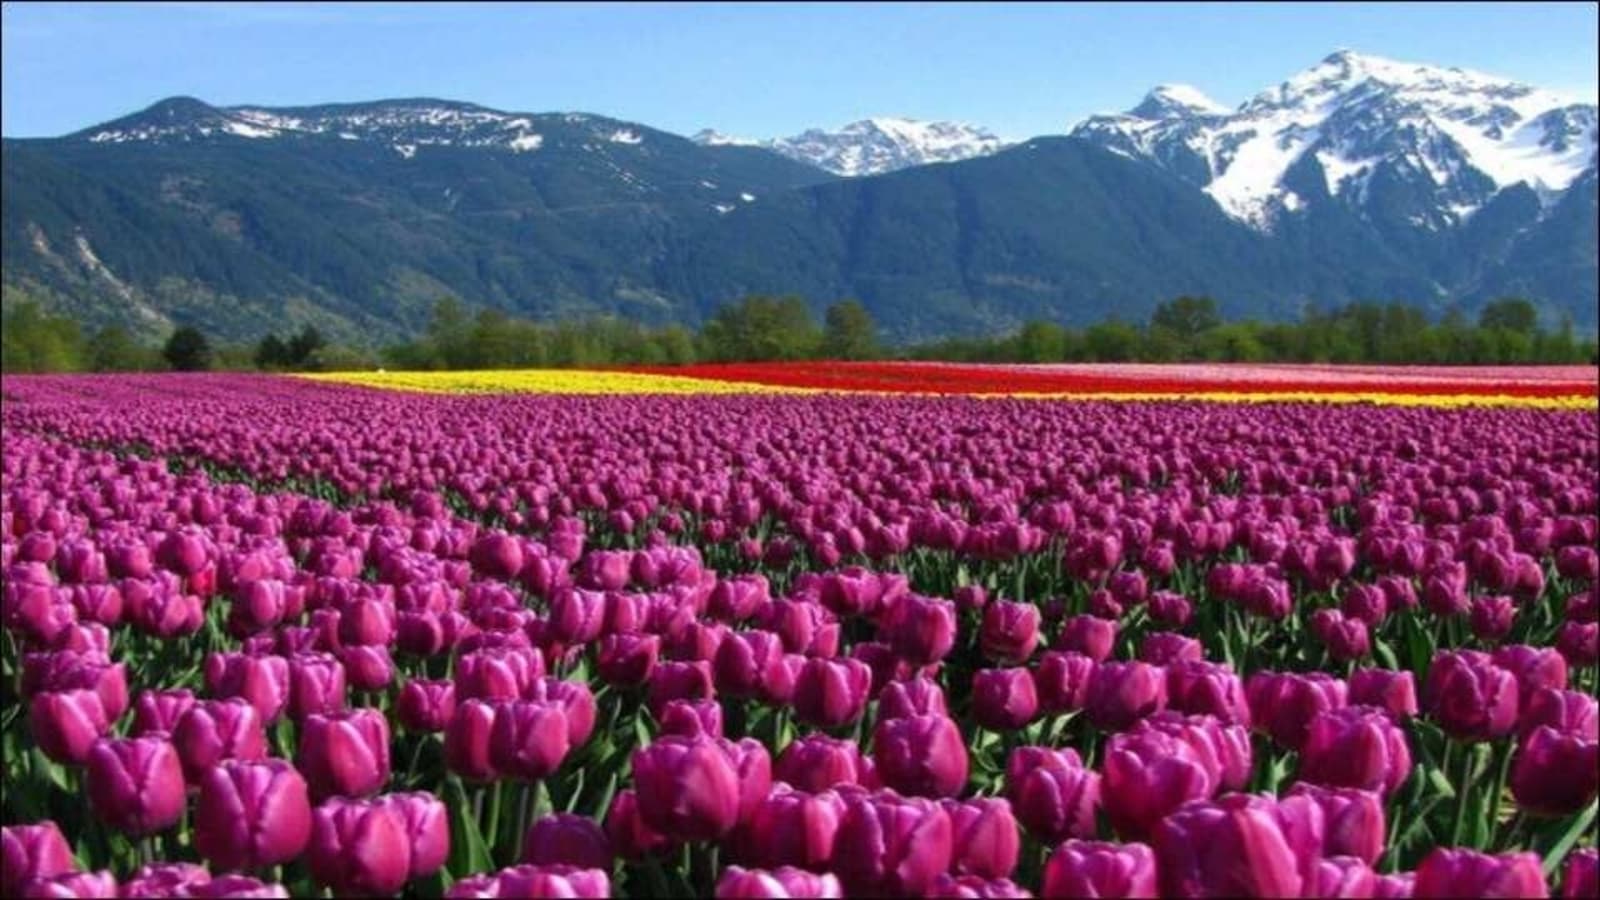 Kashmir's 6day Tulip Festival to celebrate Spring arrival, promote